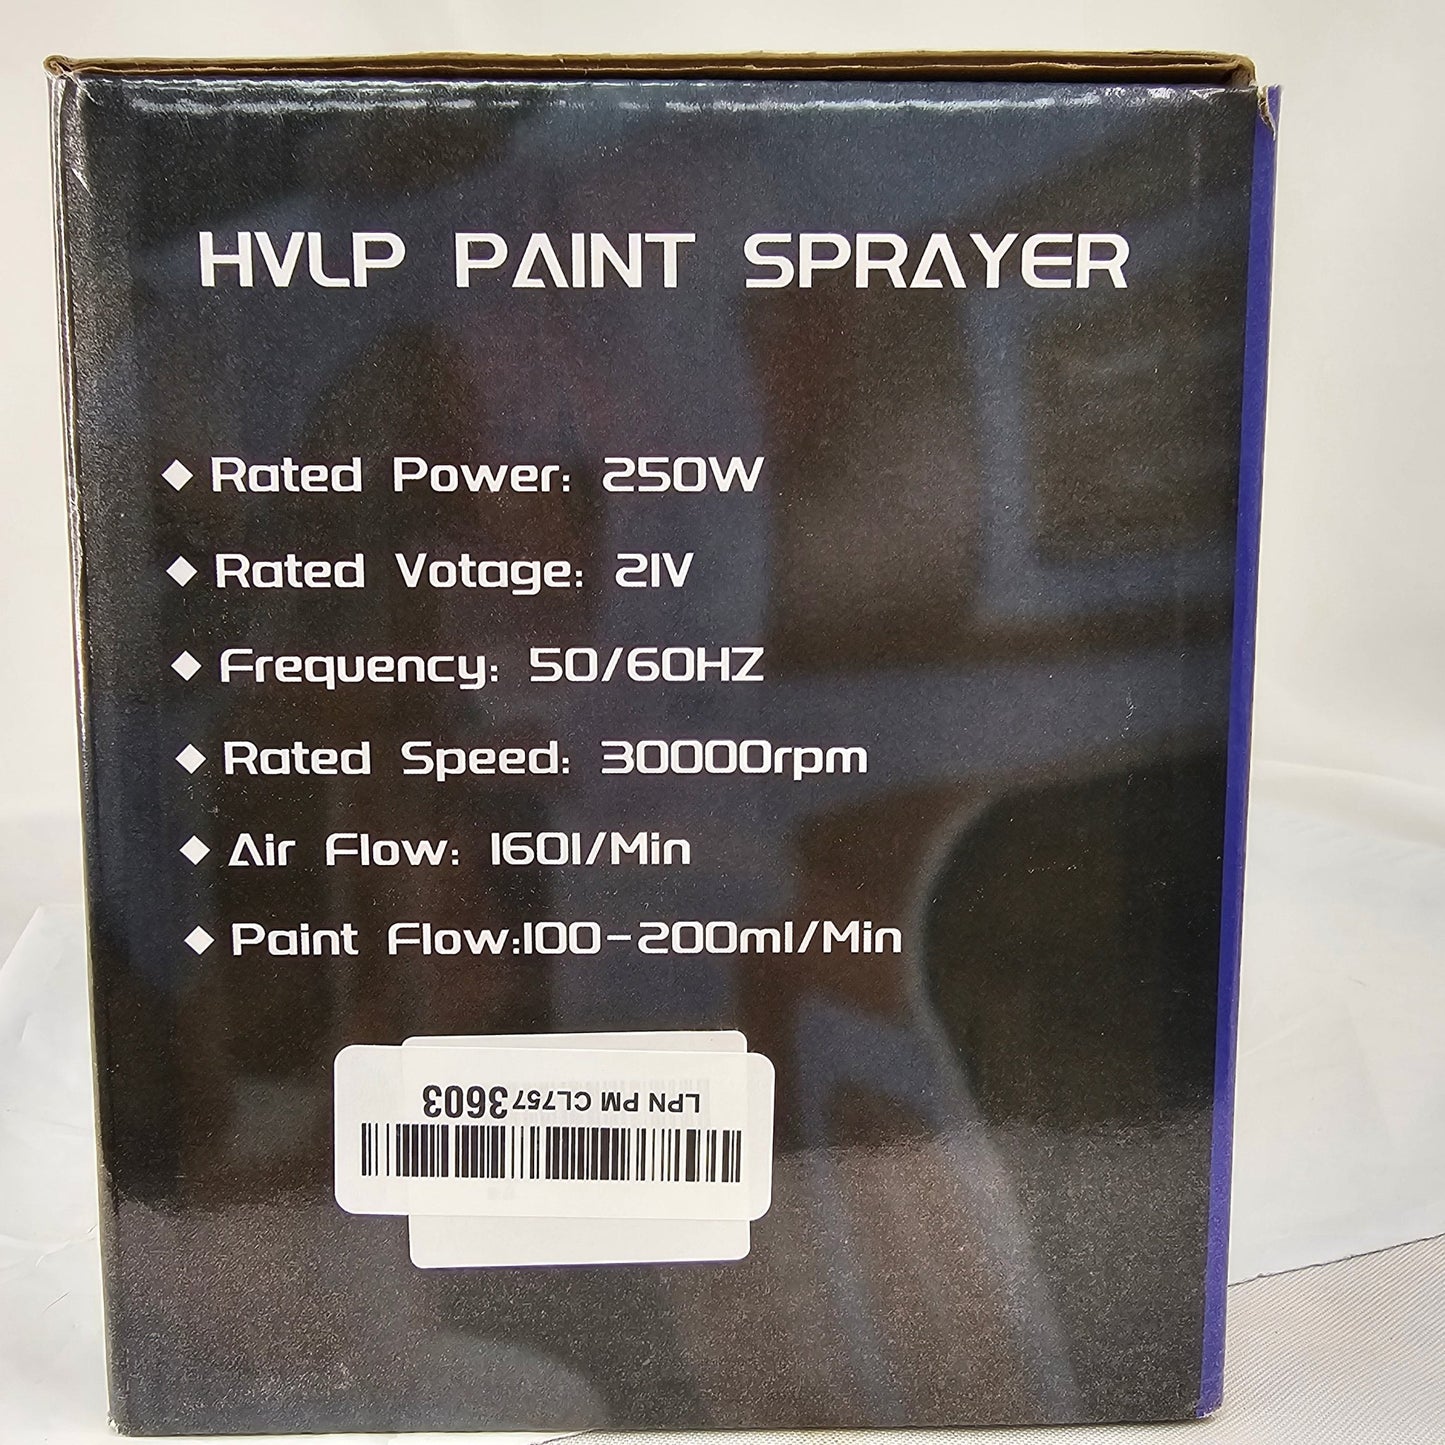 Hvlp Paint Sprayer (No Battery) Adostob - DQ Distribution